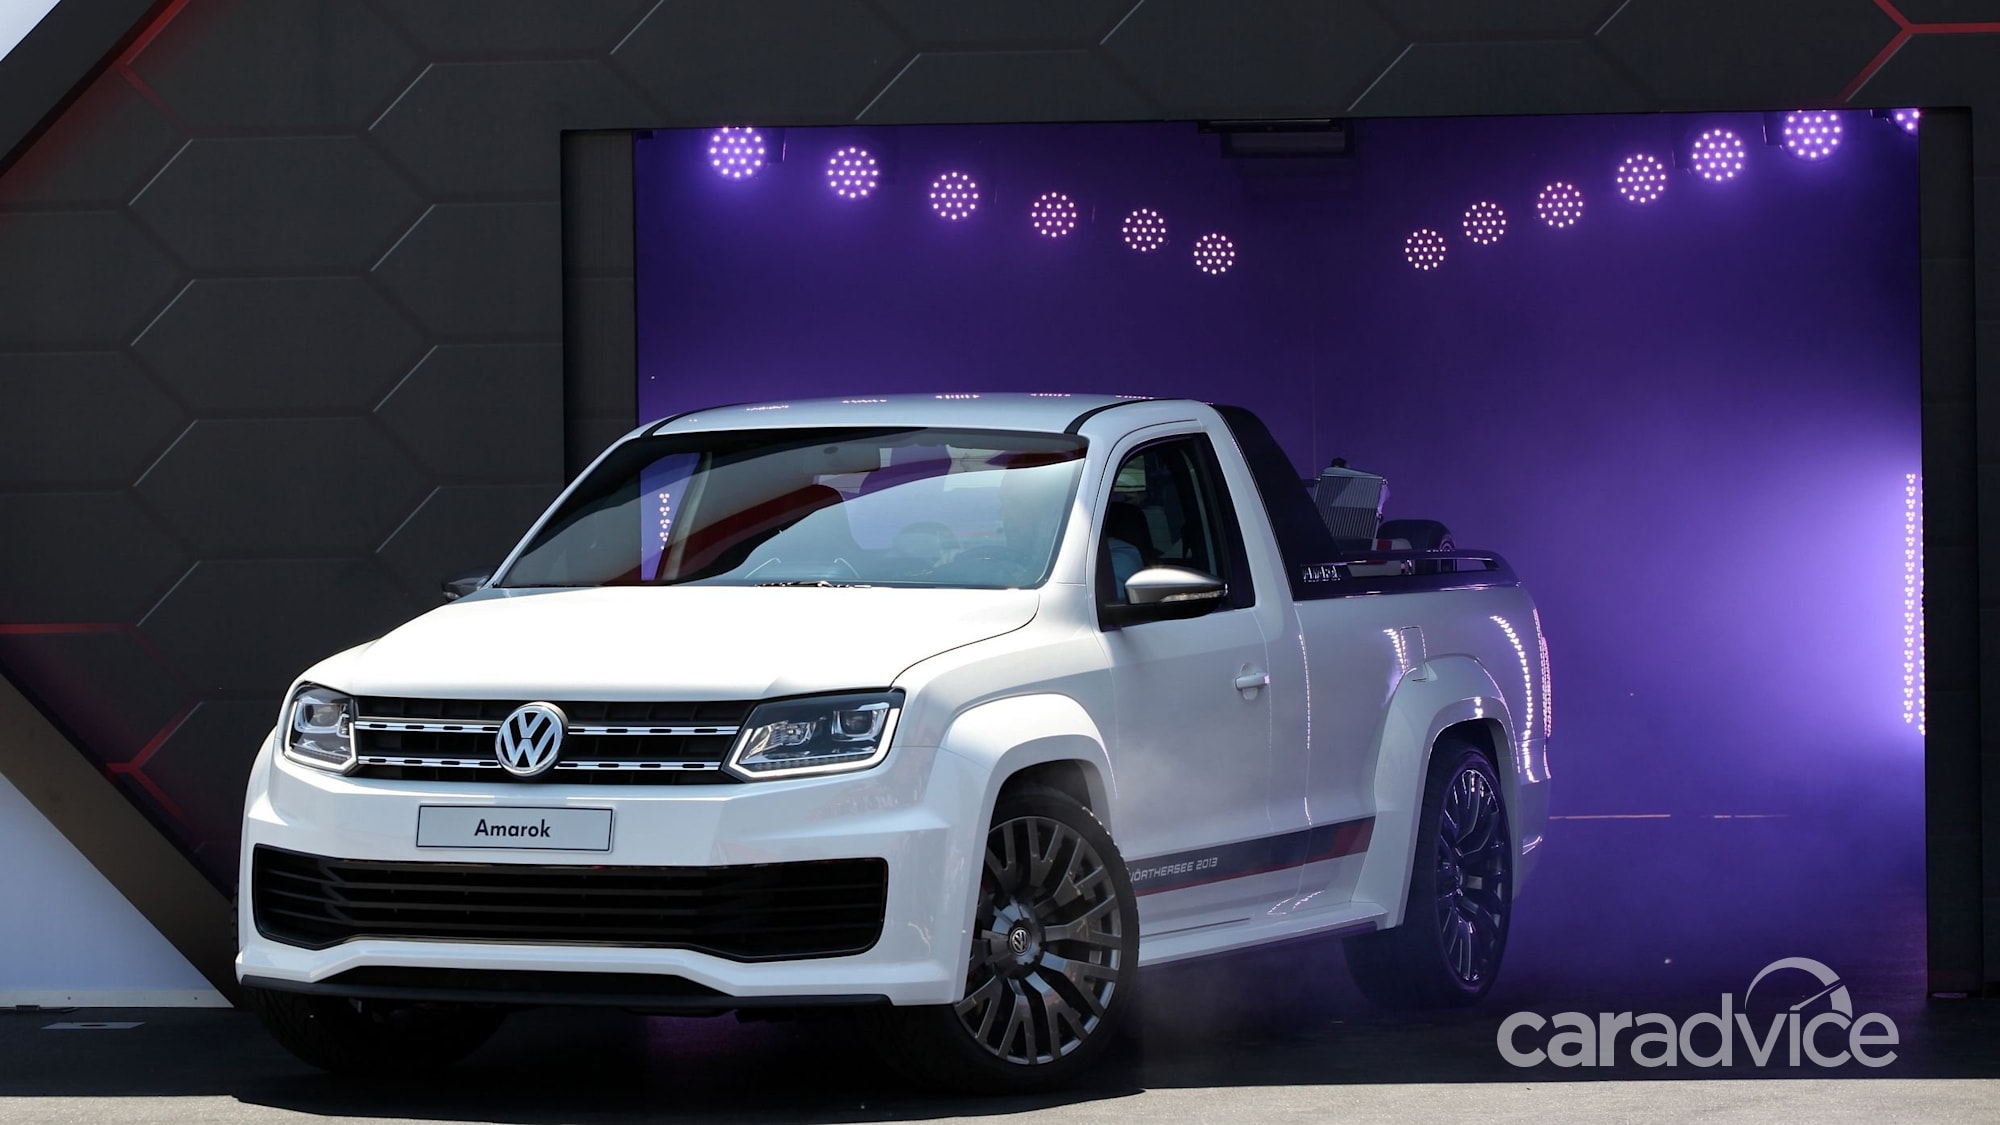 Volkswagens grunty Amarok ute | Stuff.co.nz